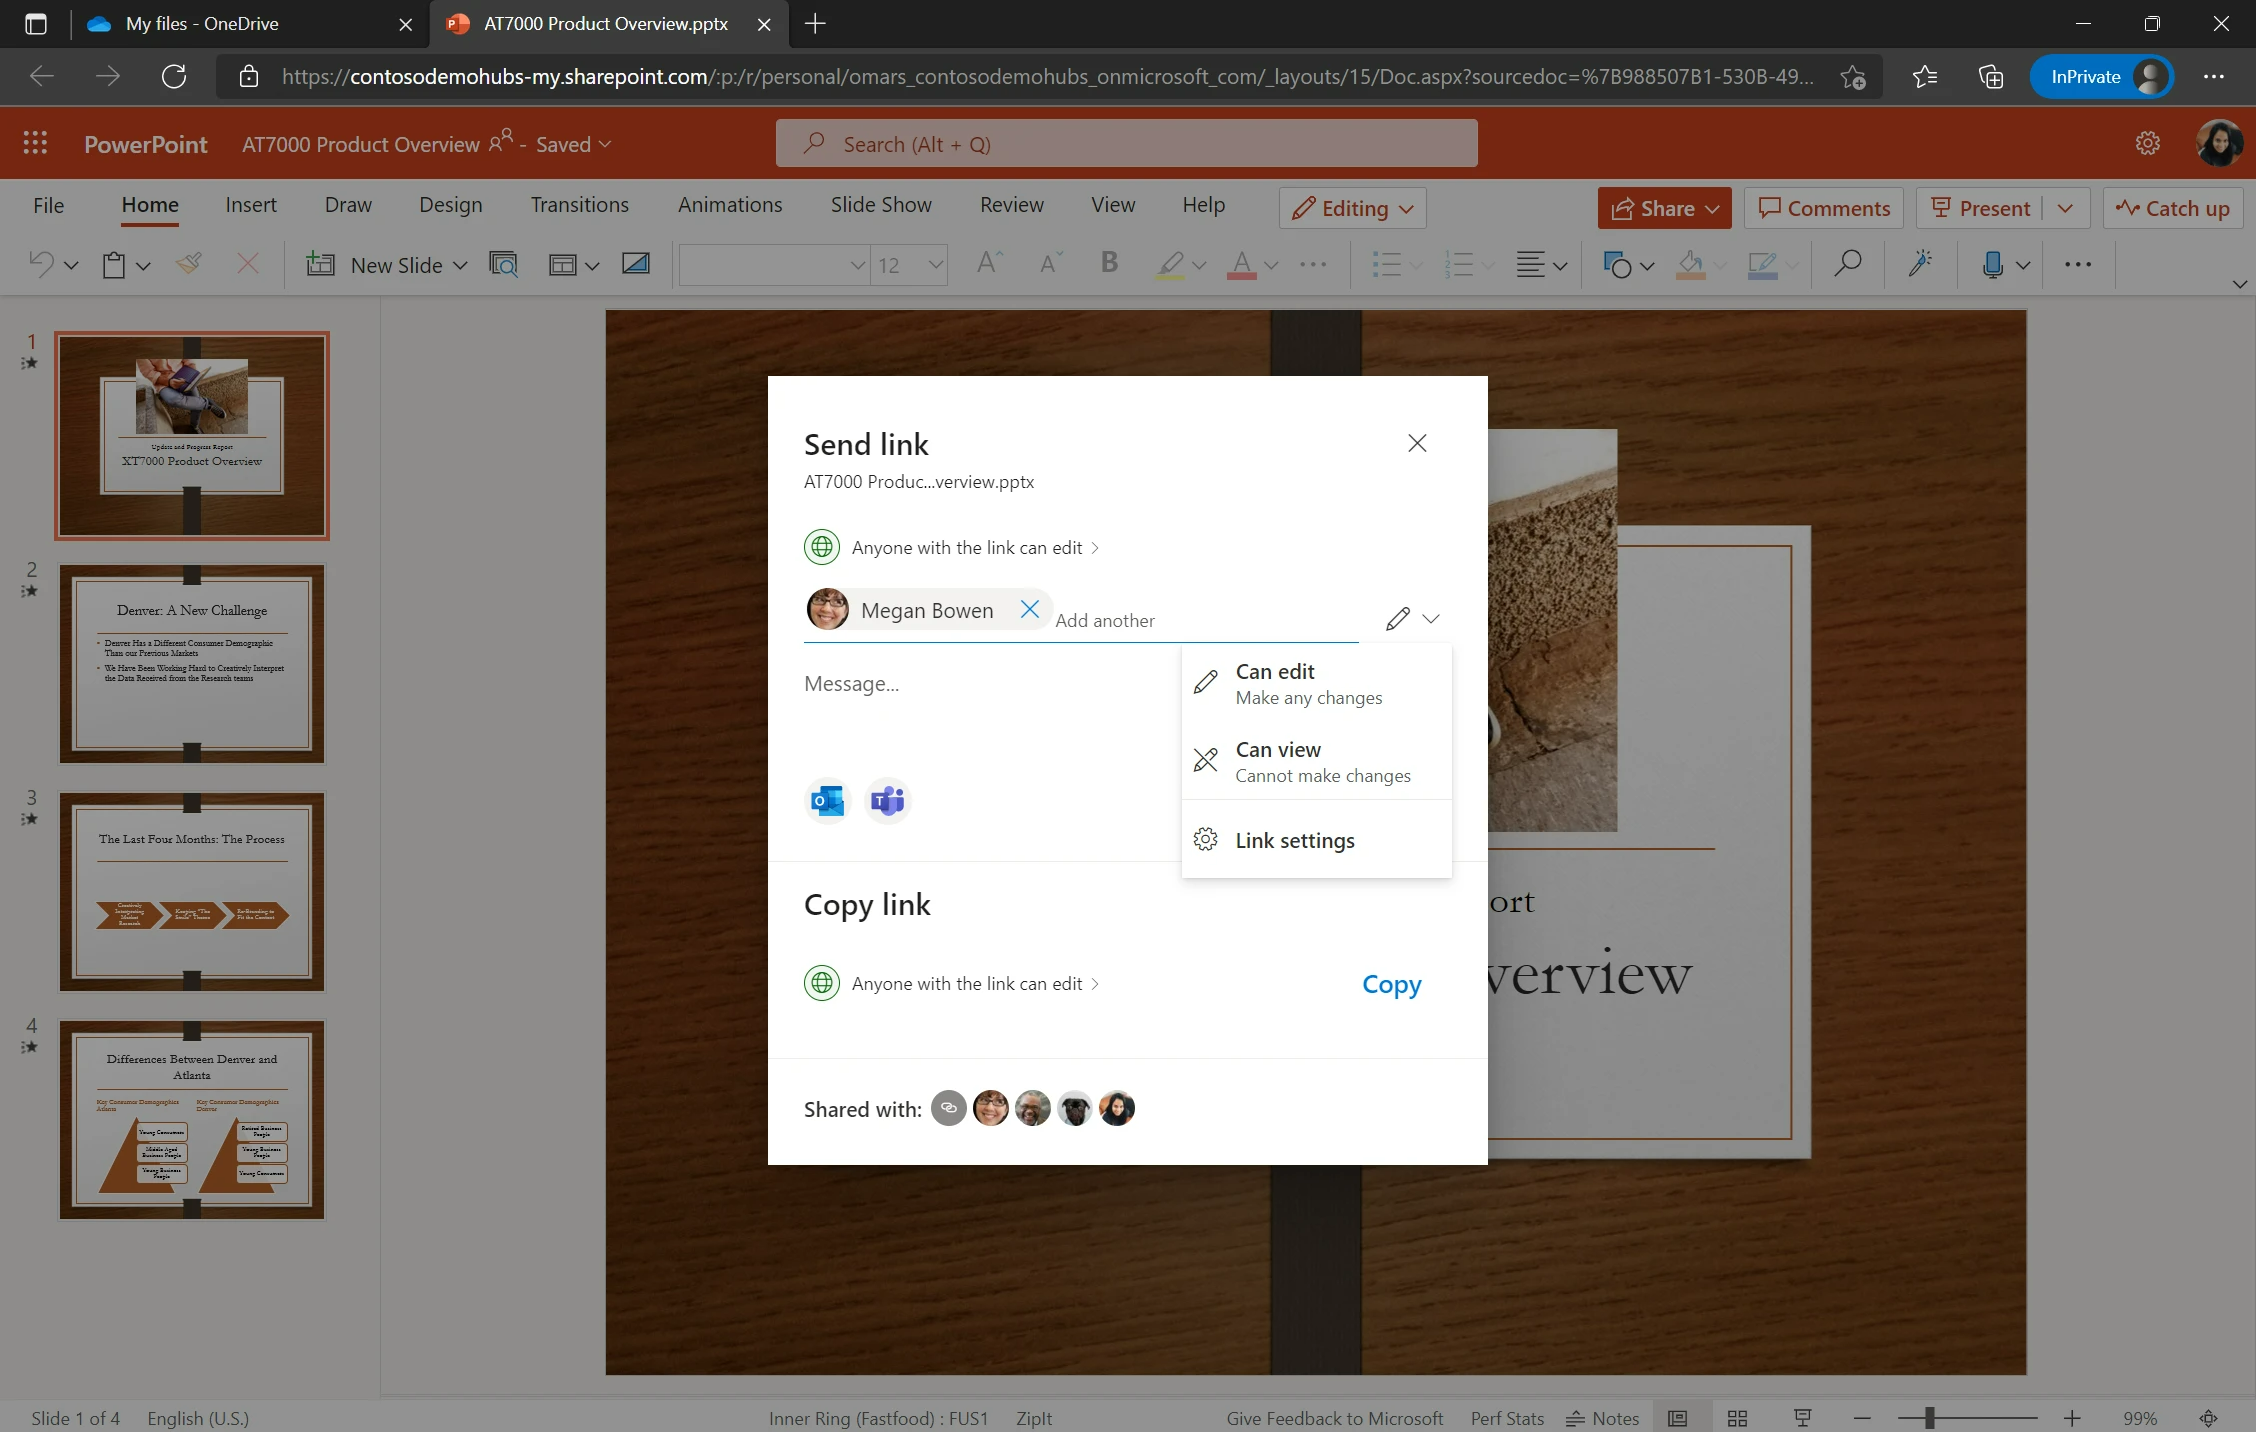 Experiência de compartilhamento do Microsoft Office no PowerPoint